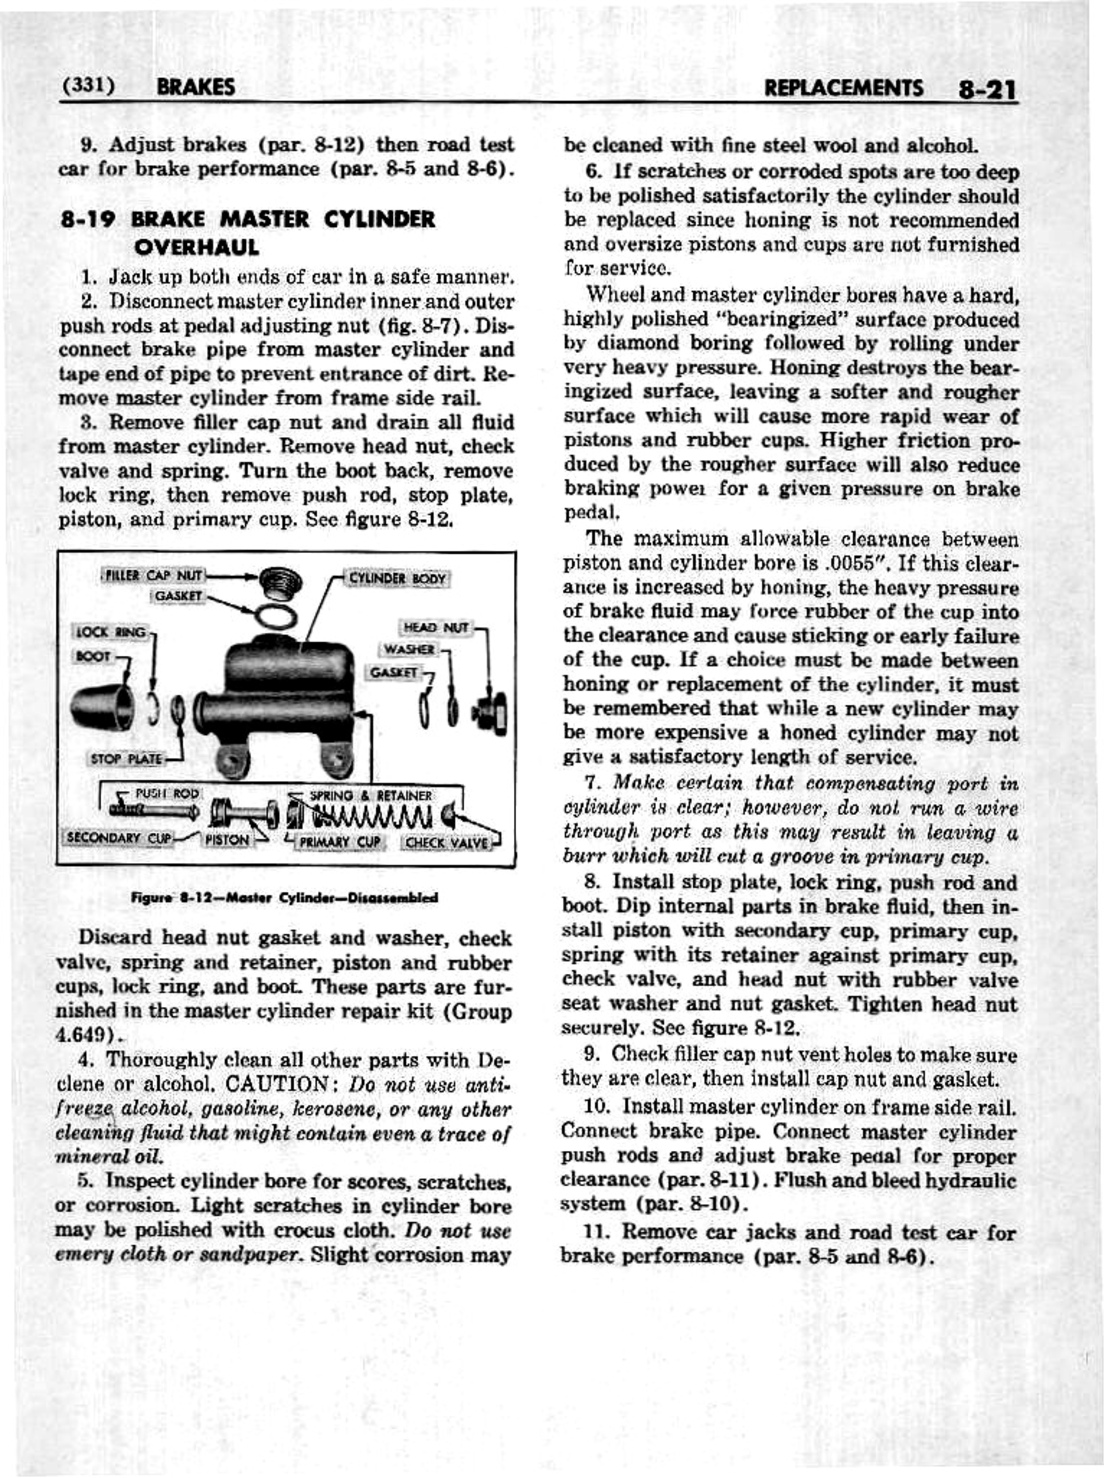 n_09 1952 Buick Shop Manual - Brakes-021-021.jpg